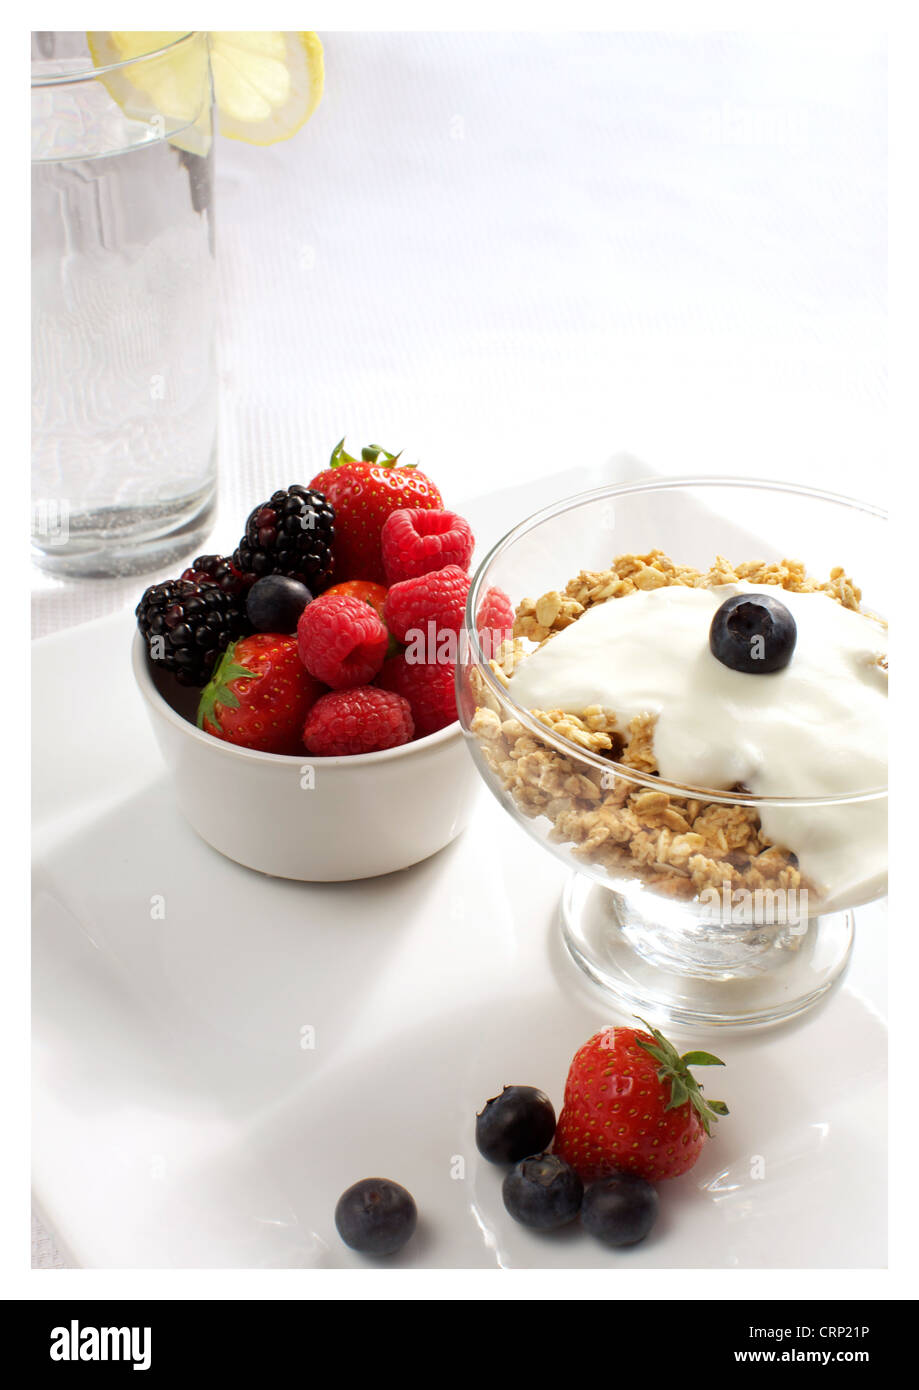 Healthy Breakfast with yogurt, granola & berries Stock Photo